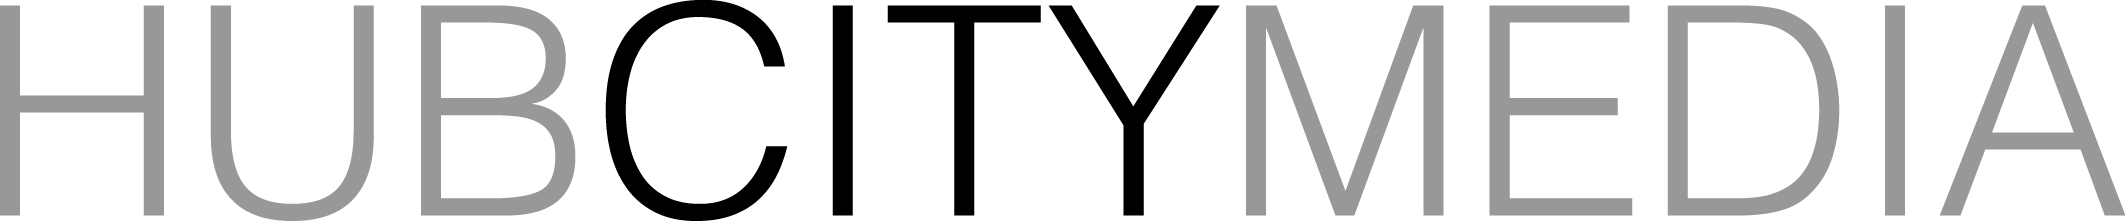 HUBCITYMEDIA Logo_HEL_LIGHT_VECTOR.png